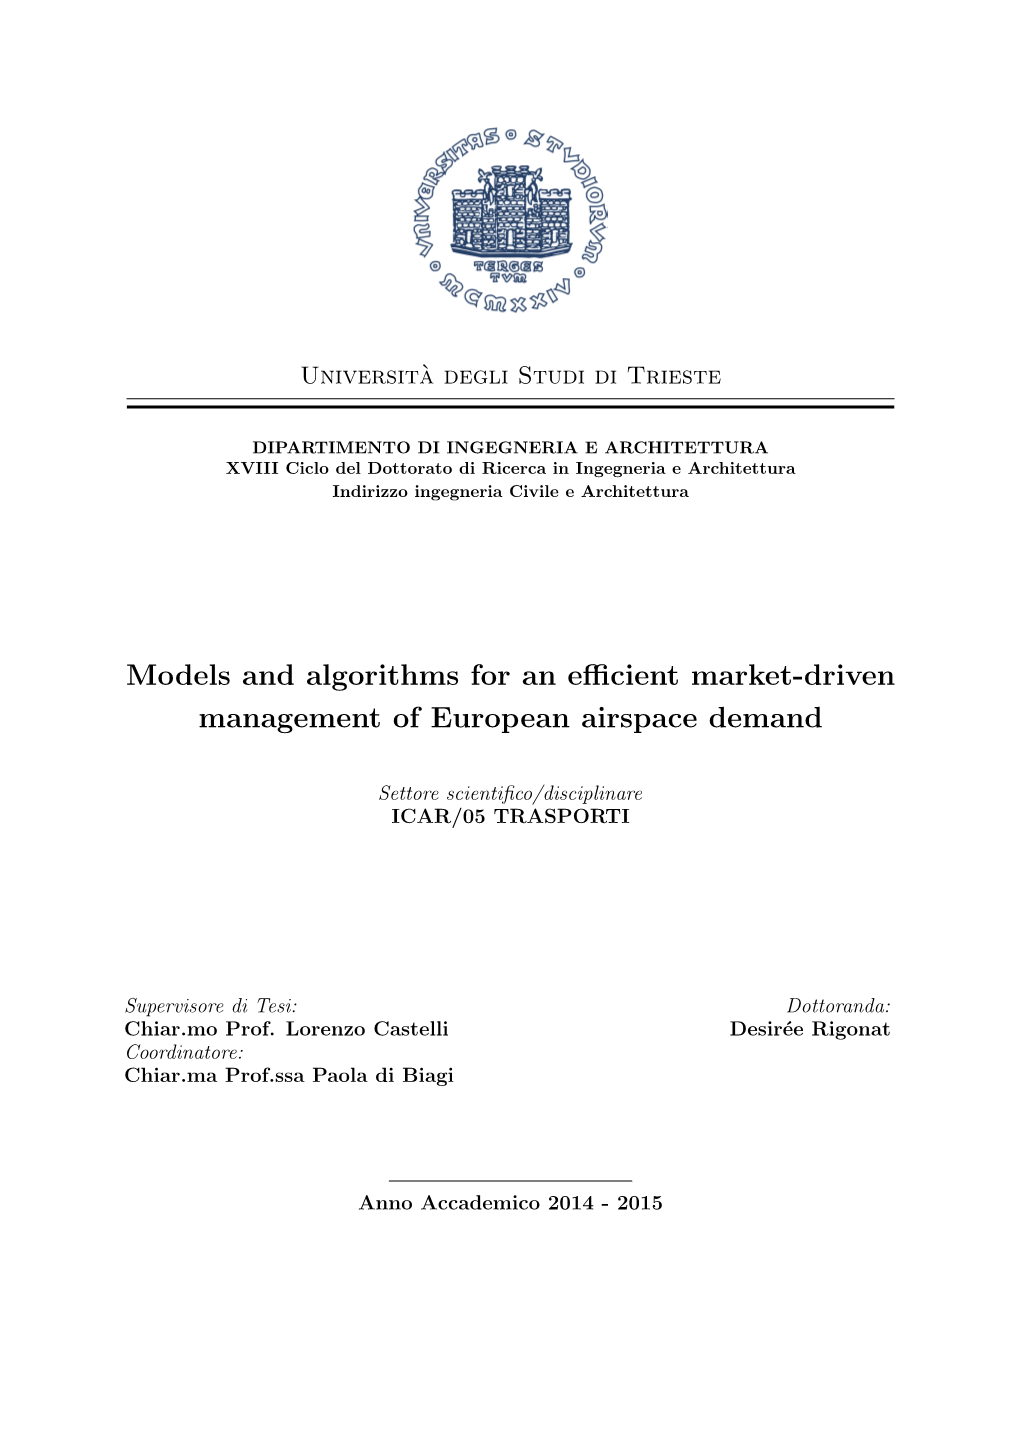 Models and Algorithms for an Efficient Market-Driven Management Of